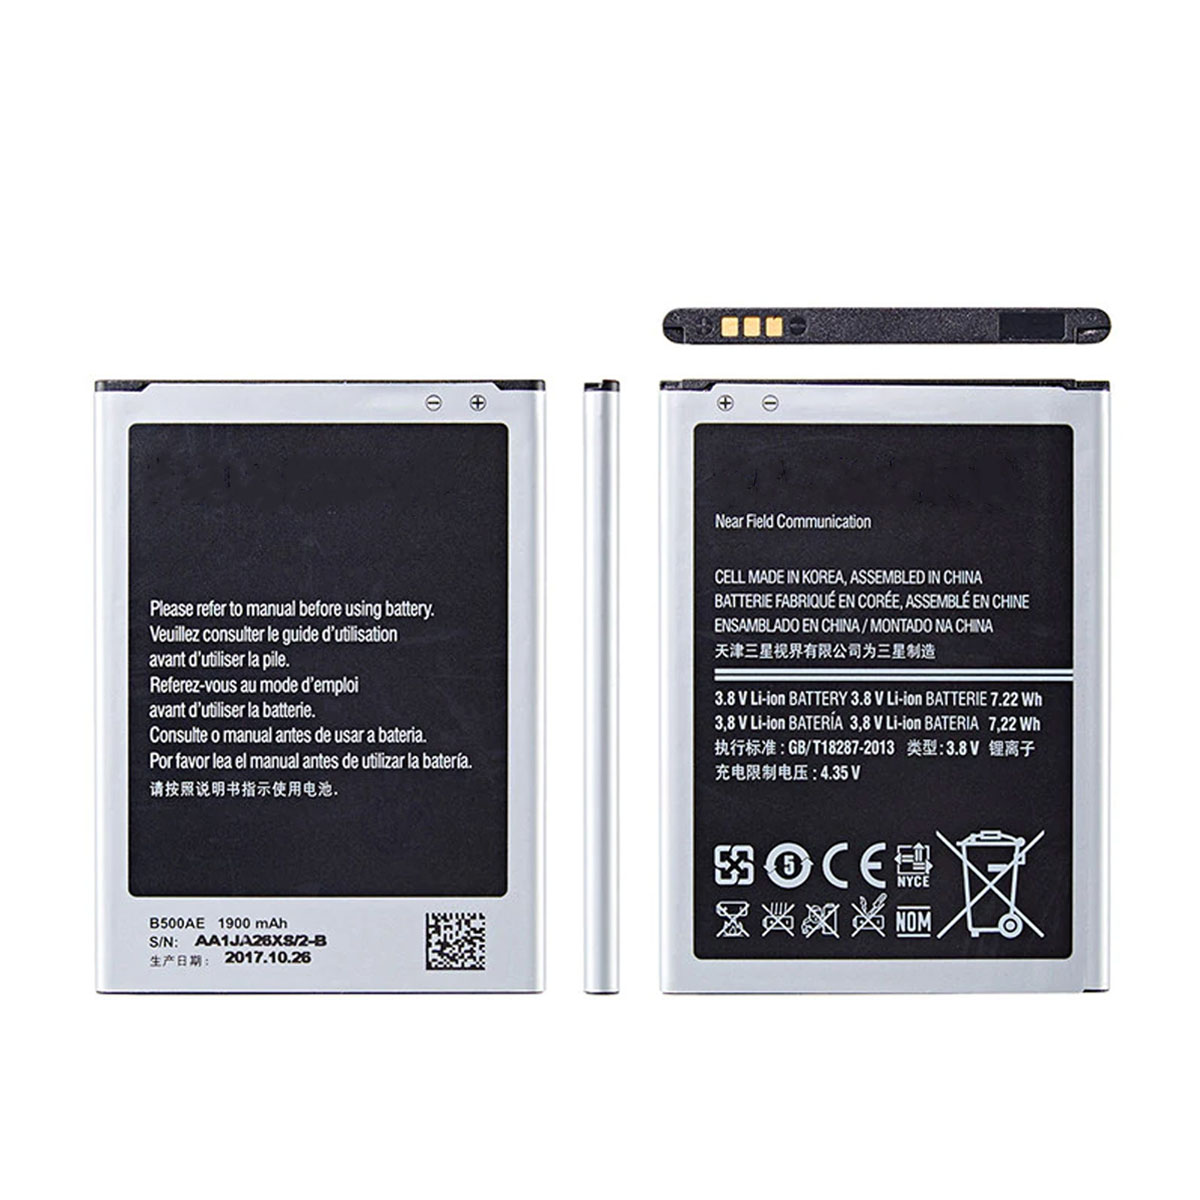 АКБ (Аккумулятор) EB-B500AE, EB-B500BE, 3 контактный для SAMSUNG Galaxy S4 Mini, S4 Mini Duos, S4 Mini LTE, GT-i9190, GT-i9192, GT-i9195, GT-i9198, 1900mAh